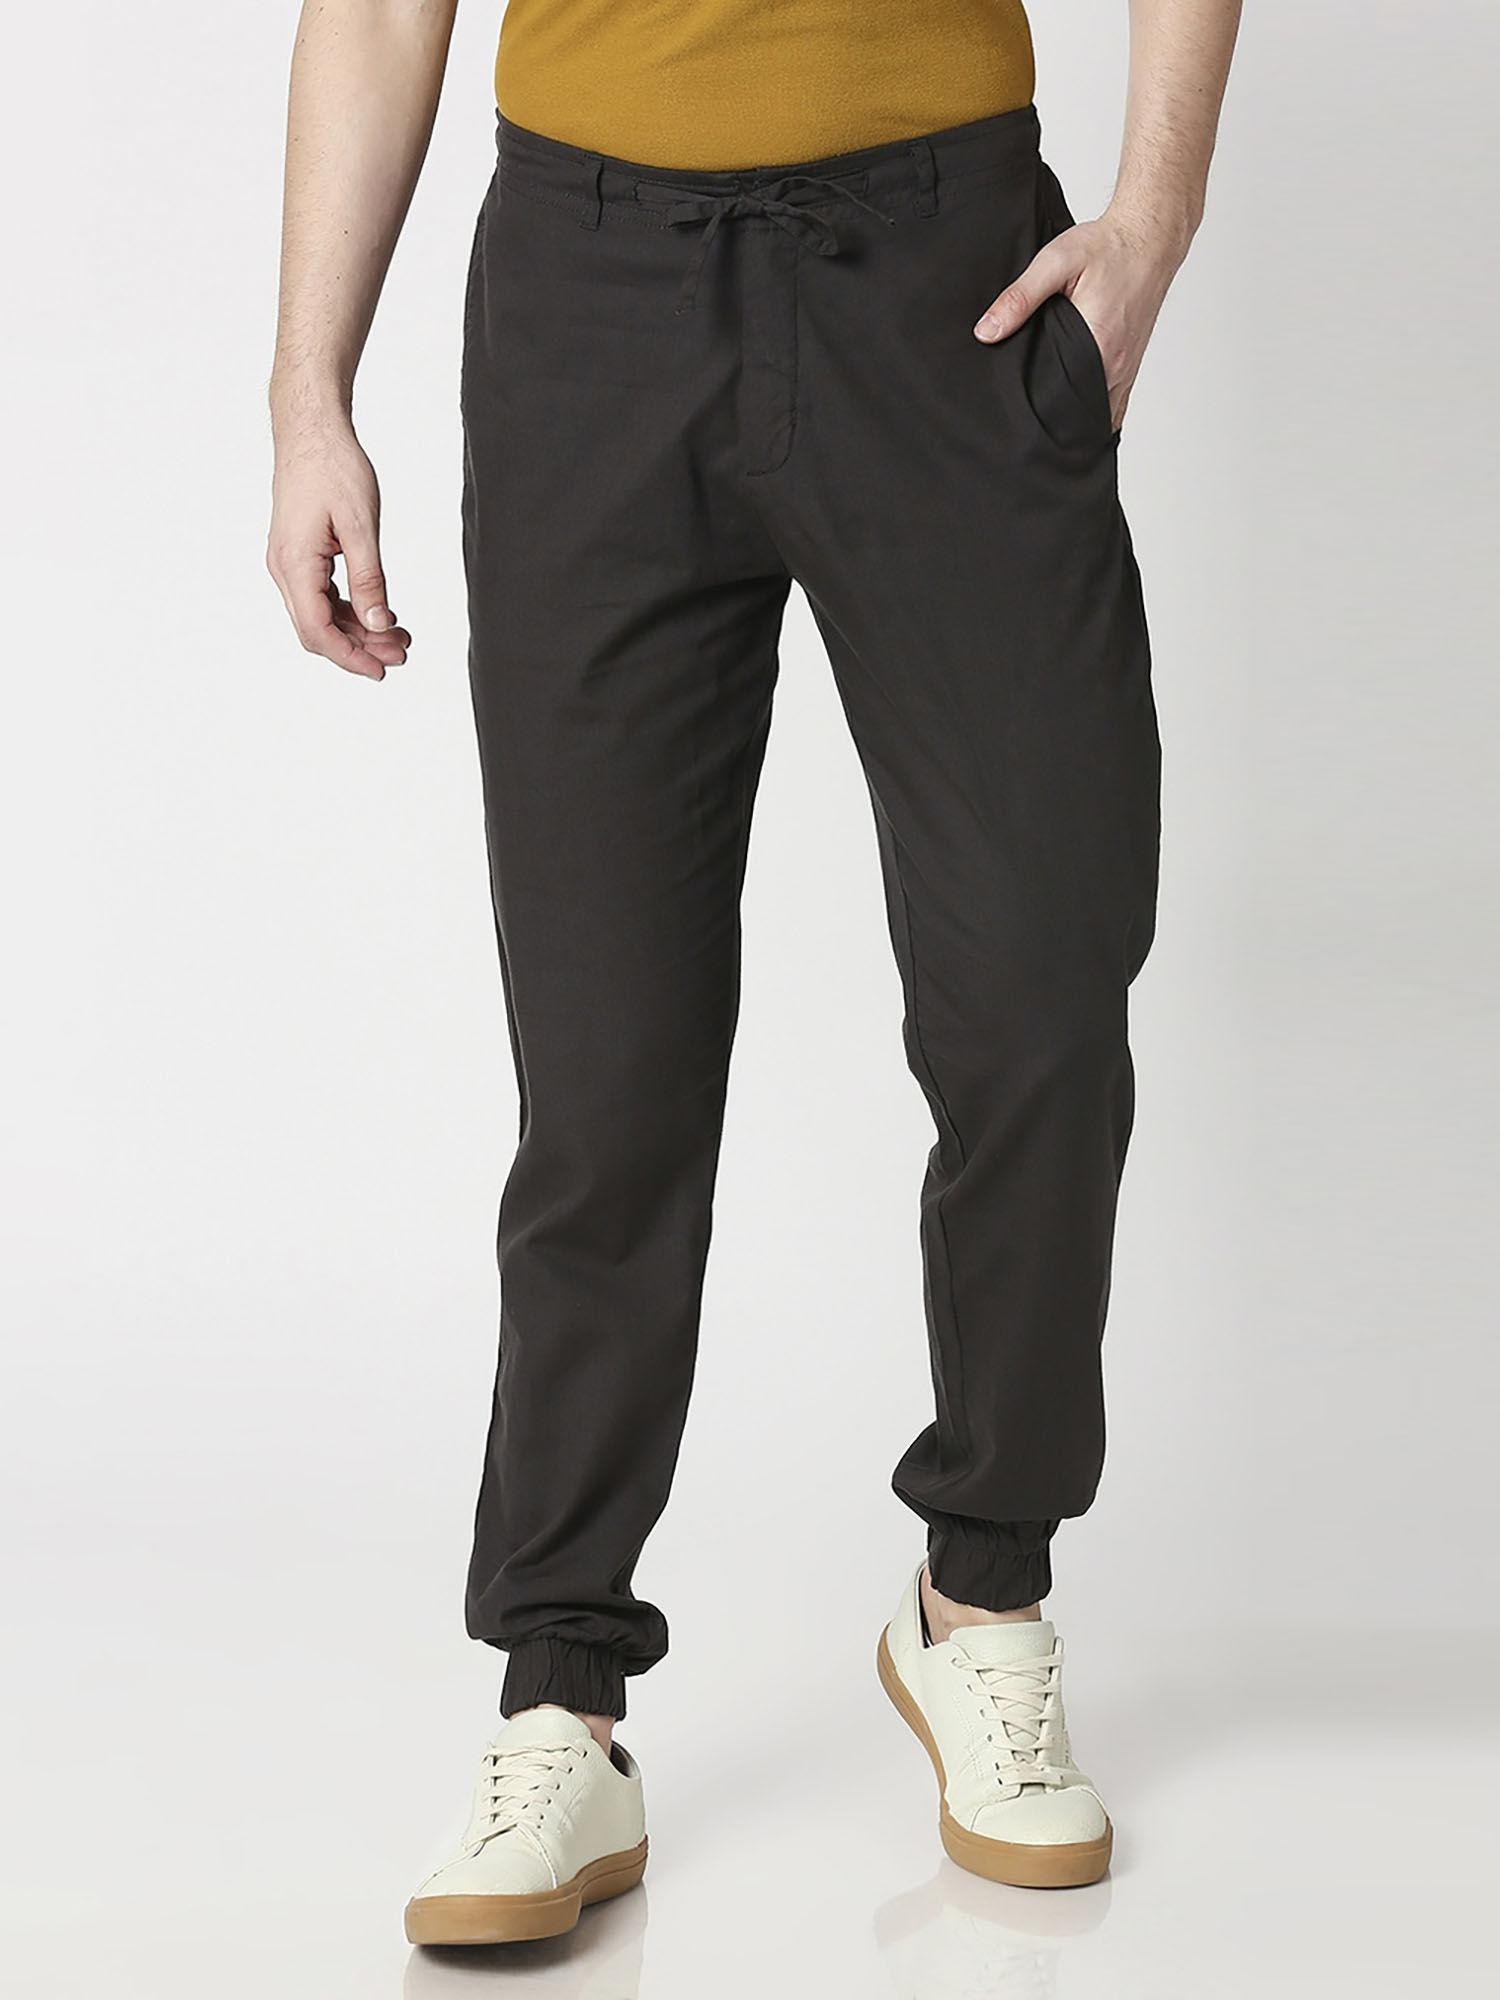 charcoal grey cotton trouser